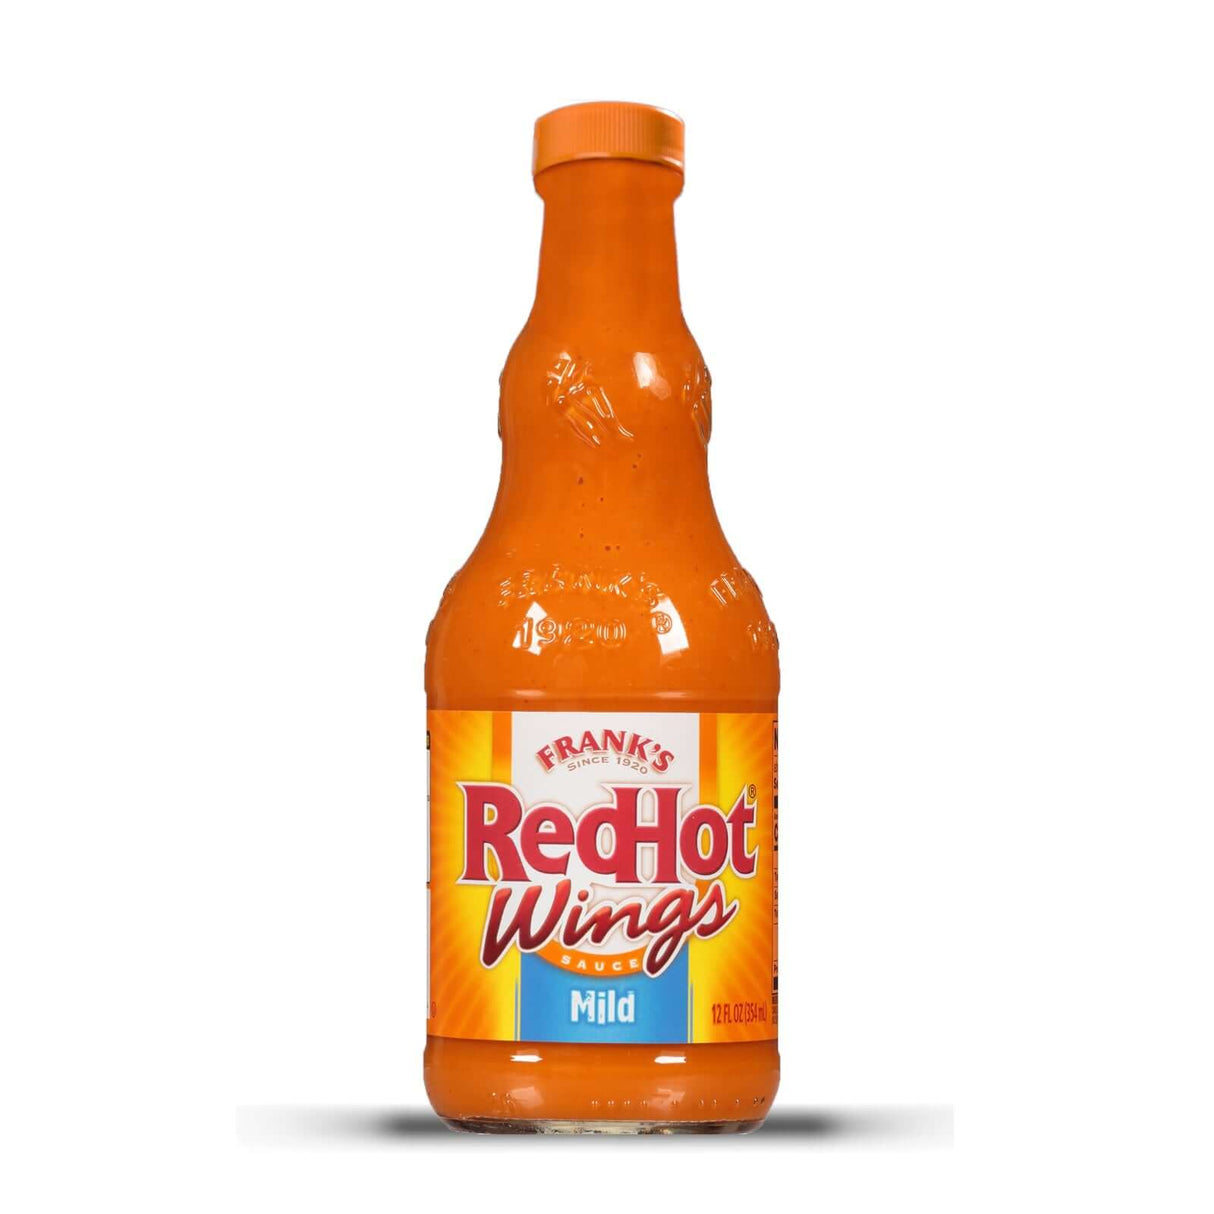 Frank's RedHot Mild Wing Sauce